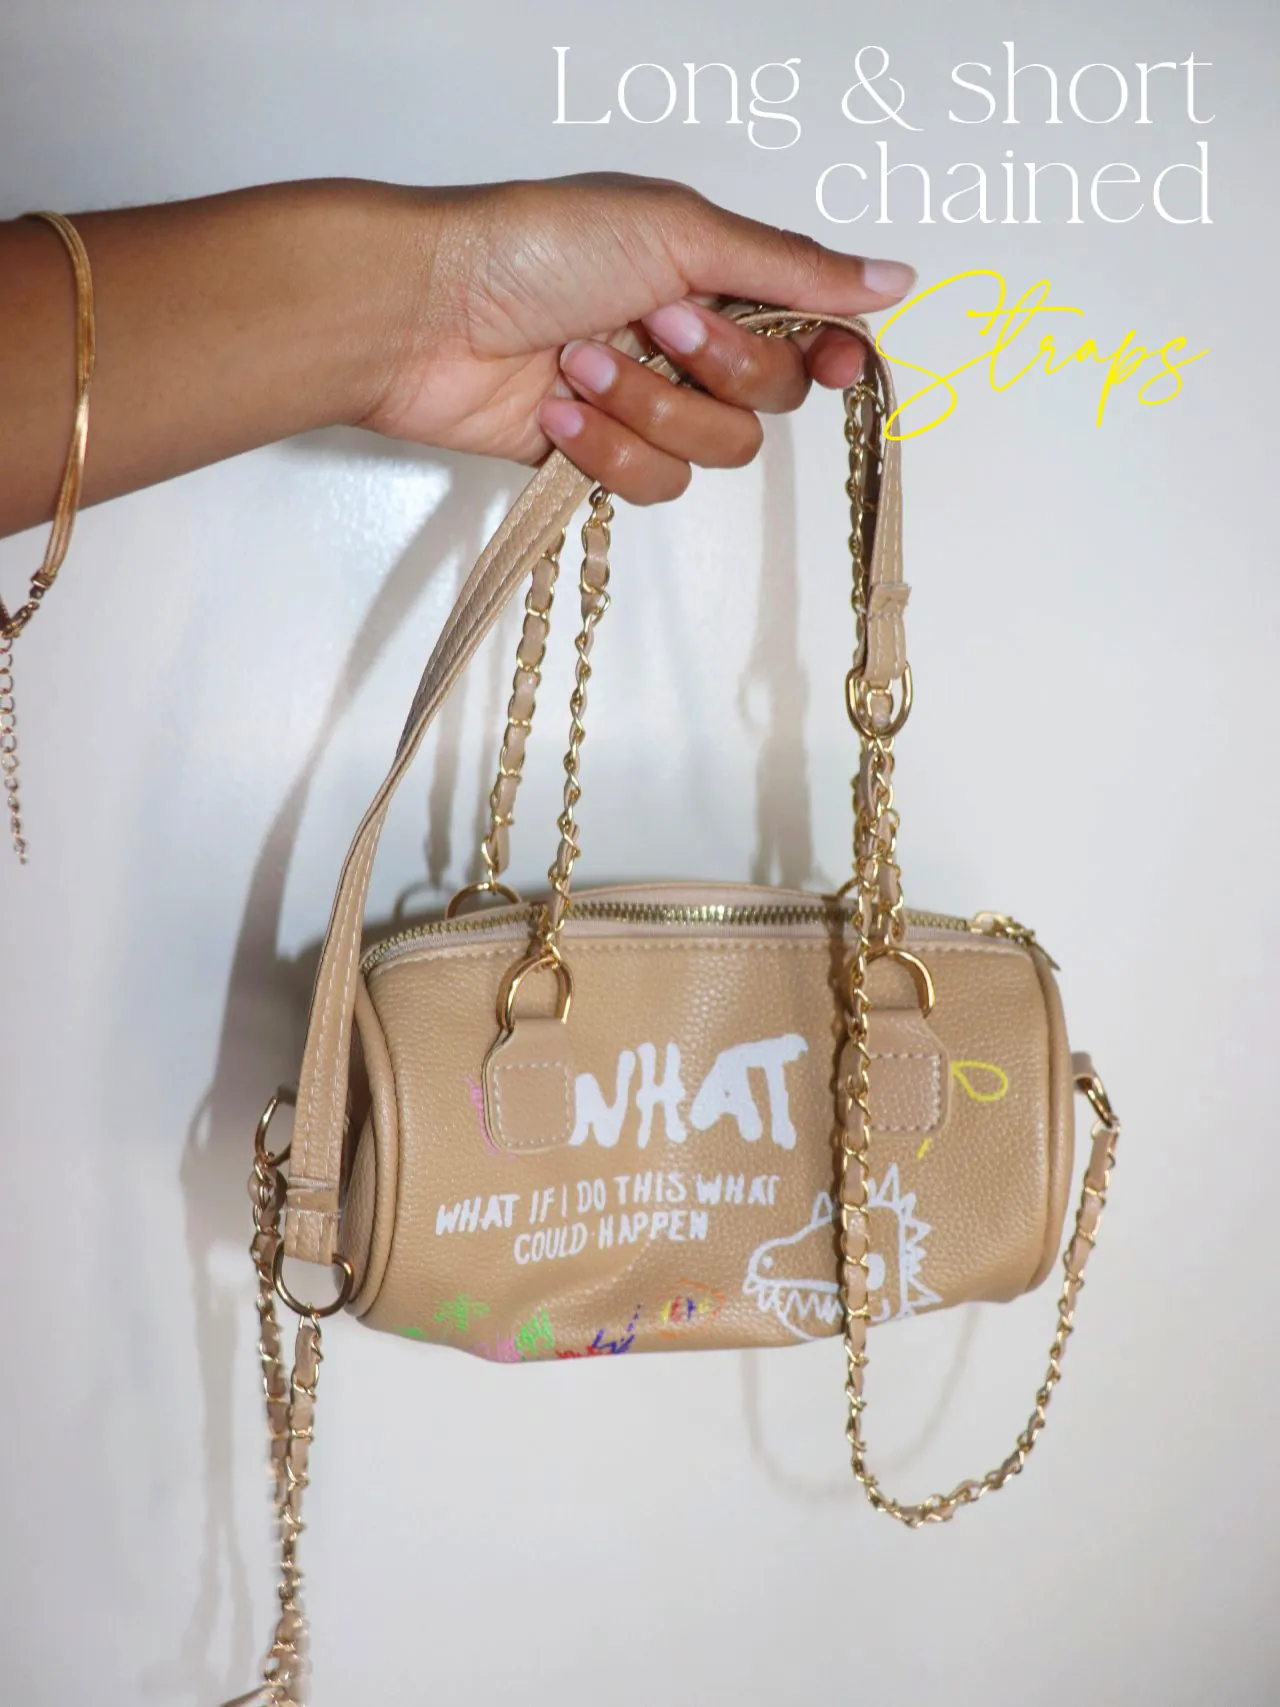 SHEIN Affordable Bag Haul 2020 